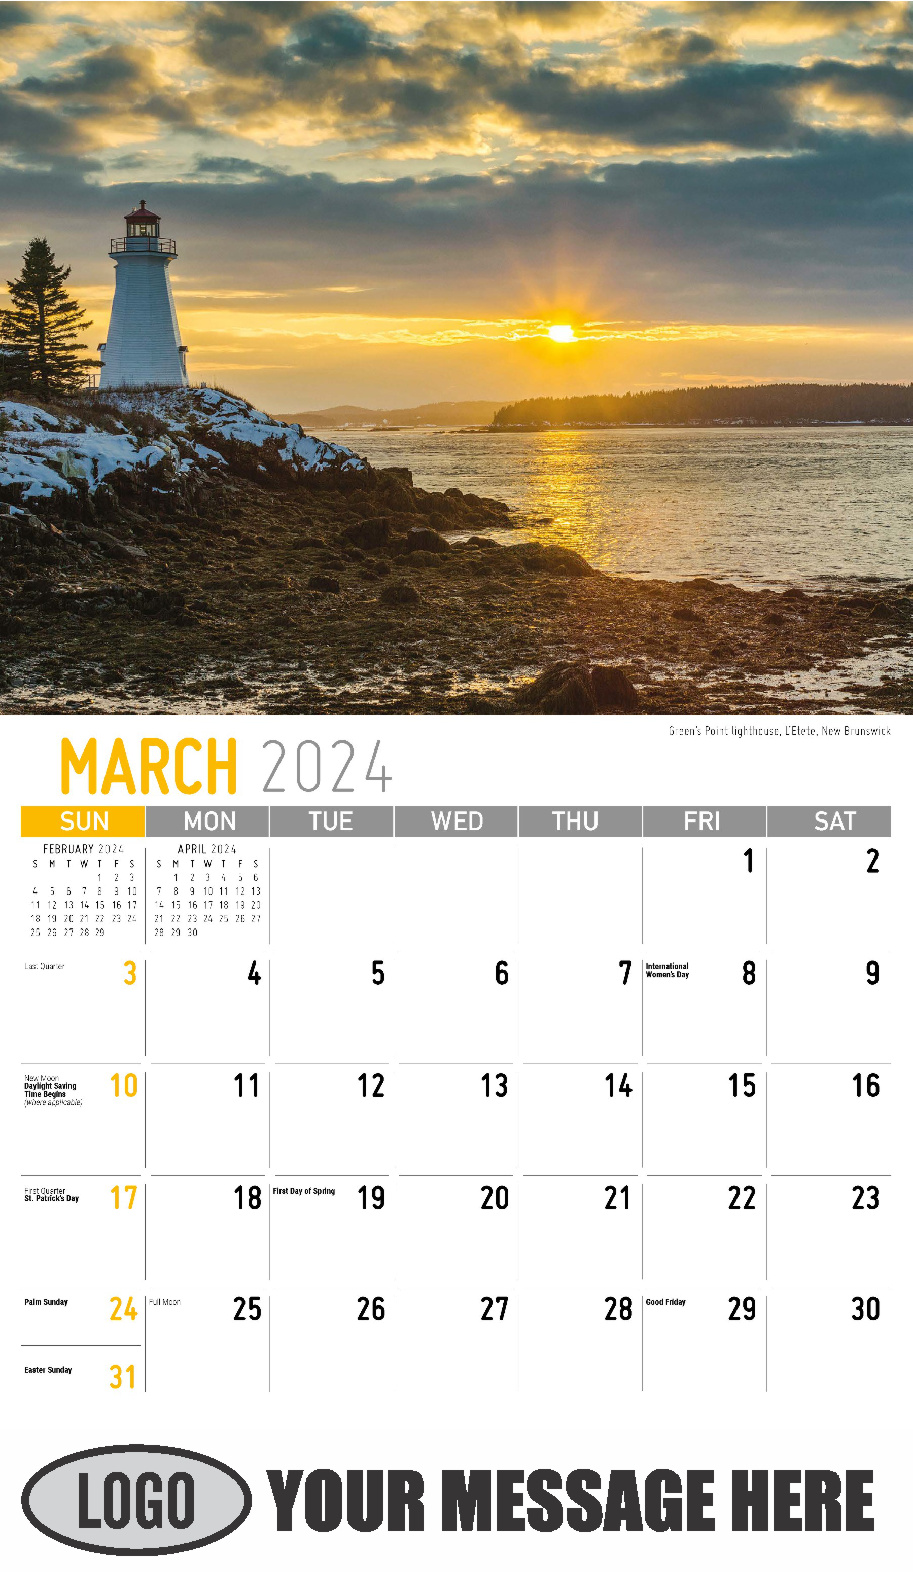 Atlantic Canada Scenic 2024 Business Promotion Calendar - March